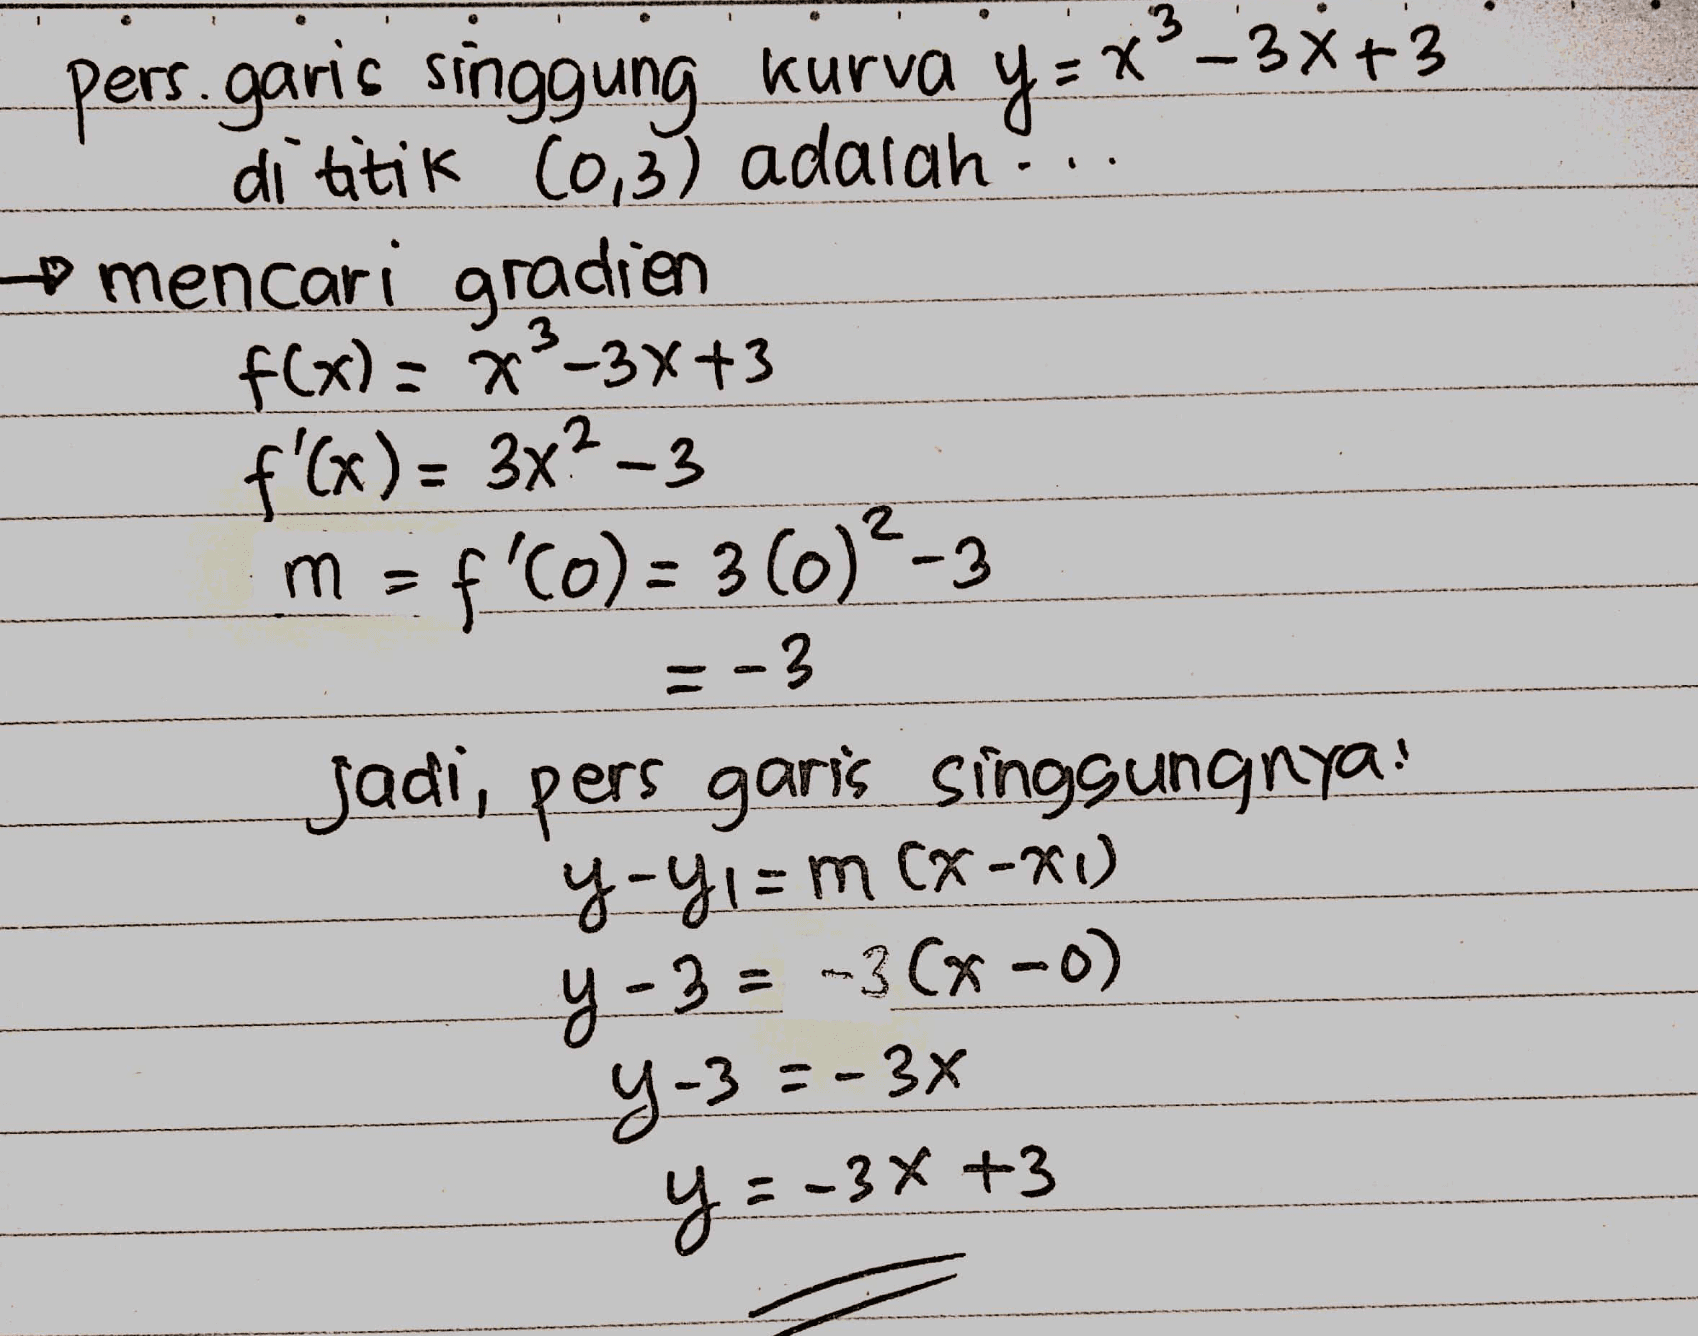 pers. garis singgung kurva y=x2-3x+3 di titik (0,3) adalah... mencari gradien f(x) = x²-3x43 f'(x) = 3x?-3 m = f'(o)= 360)2-3 =-3 Jadi, pers garis singgungnya: y-yı= m Cx-x1) Y-3 = -3 (9-0) Y-3--3% y=-3x +3 